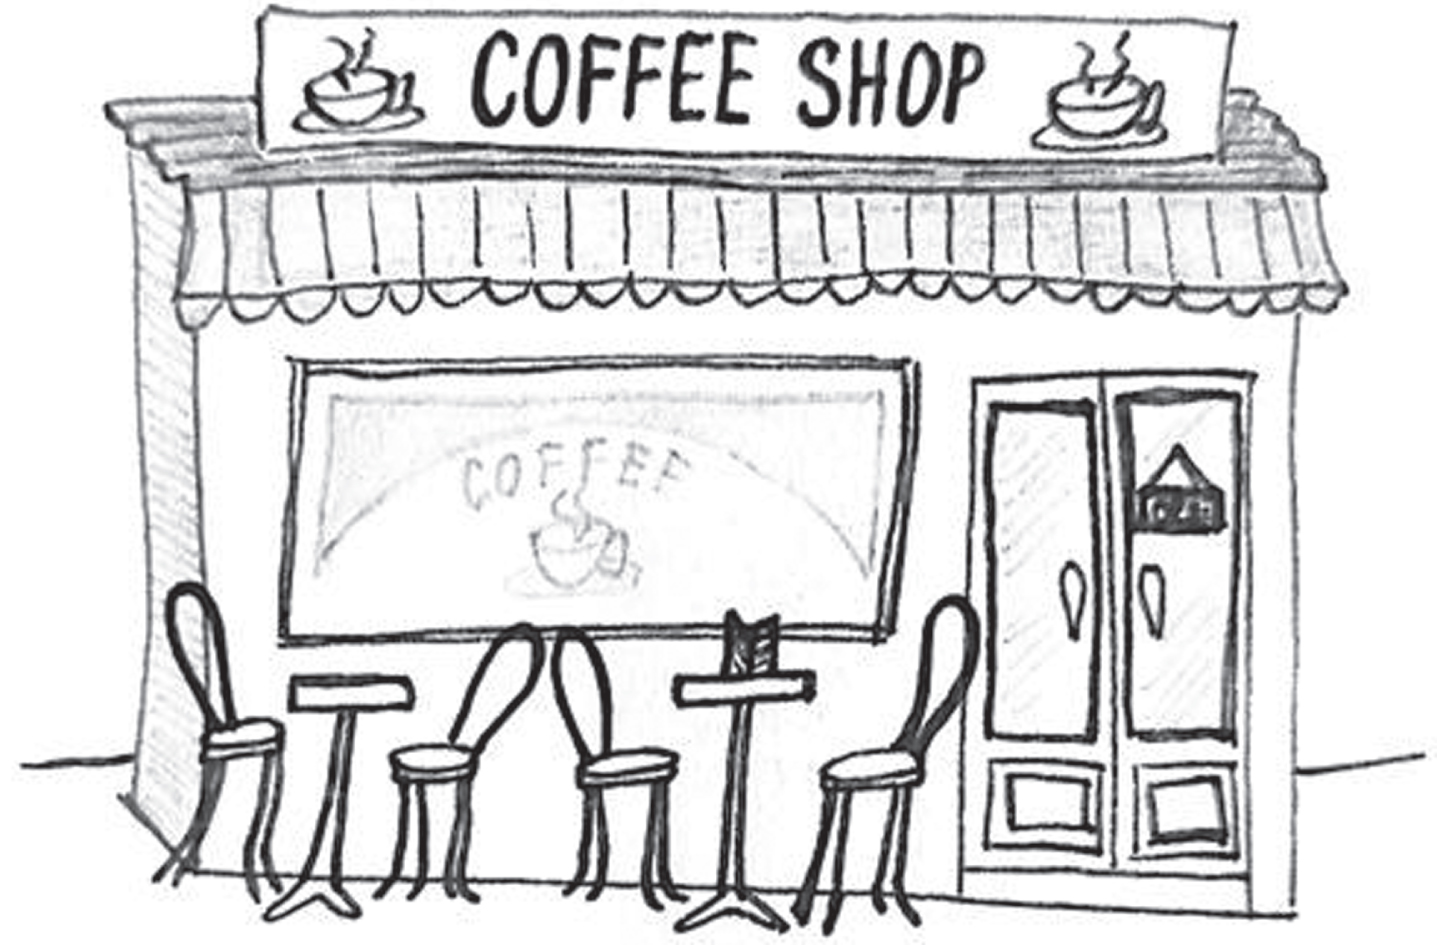 The Coffee Shop.